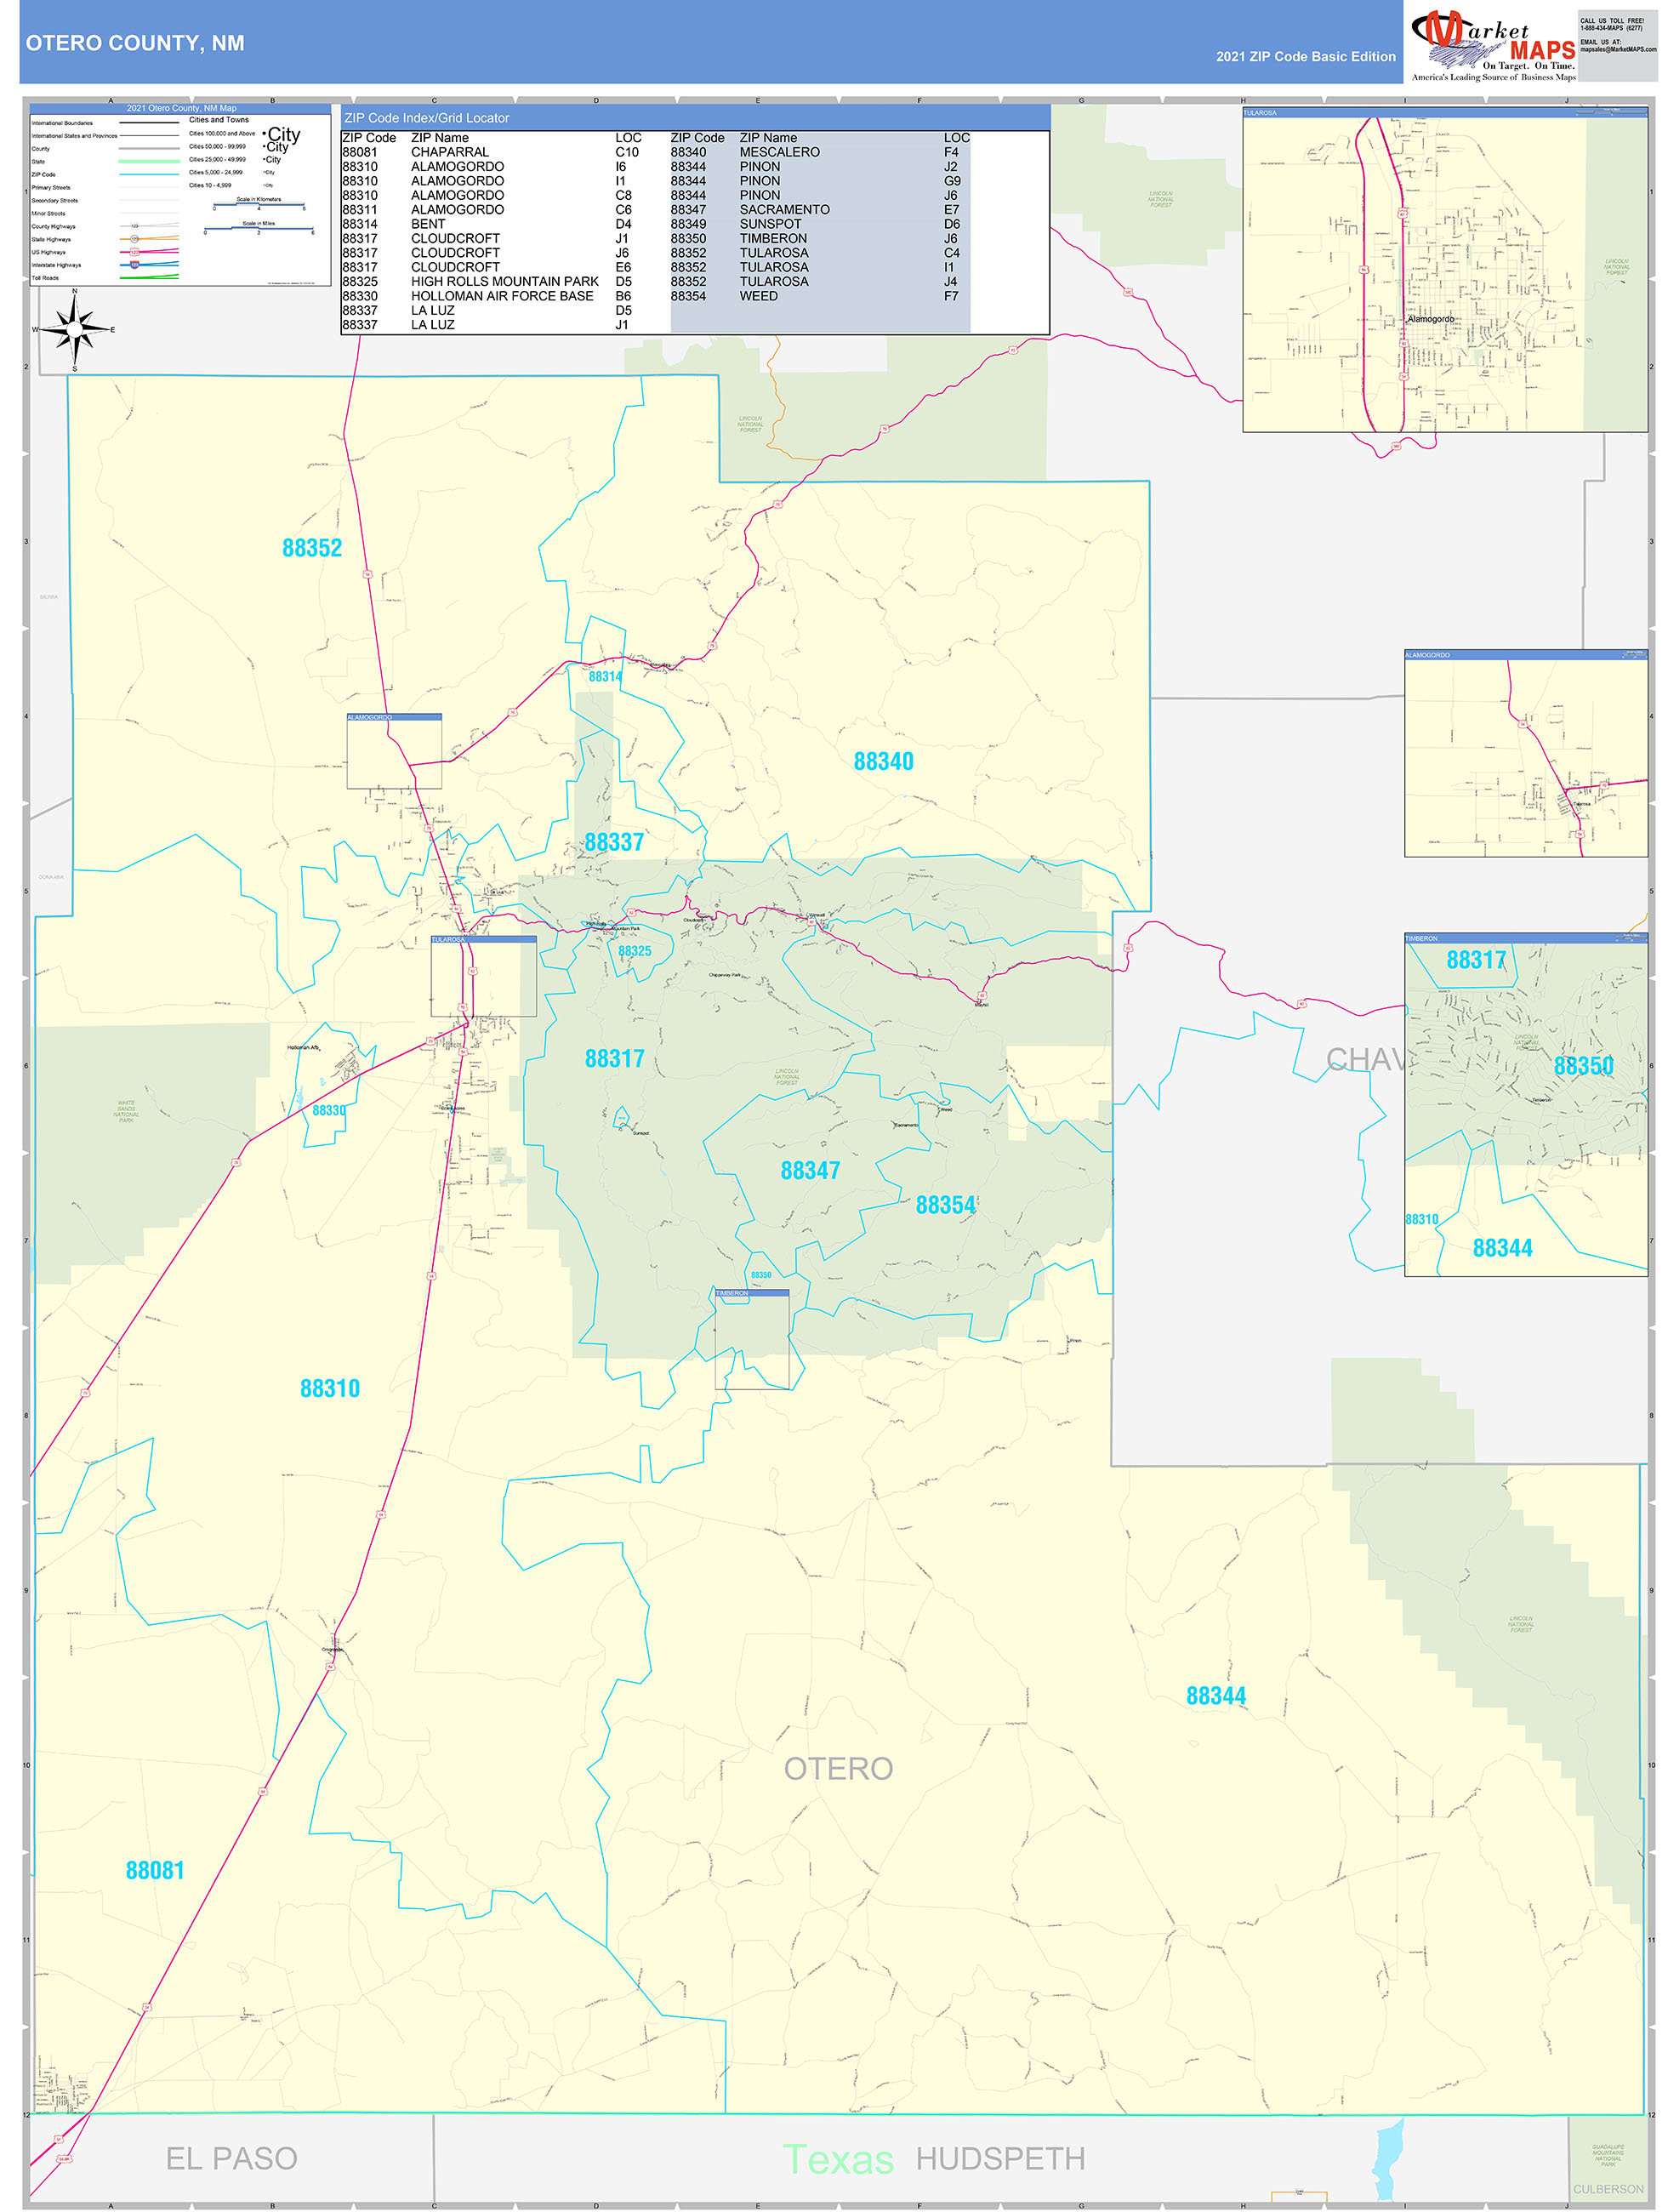 Otero County, NM Zip Code Wall Map Basic Style by MarketMAPS MapSales